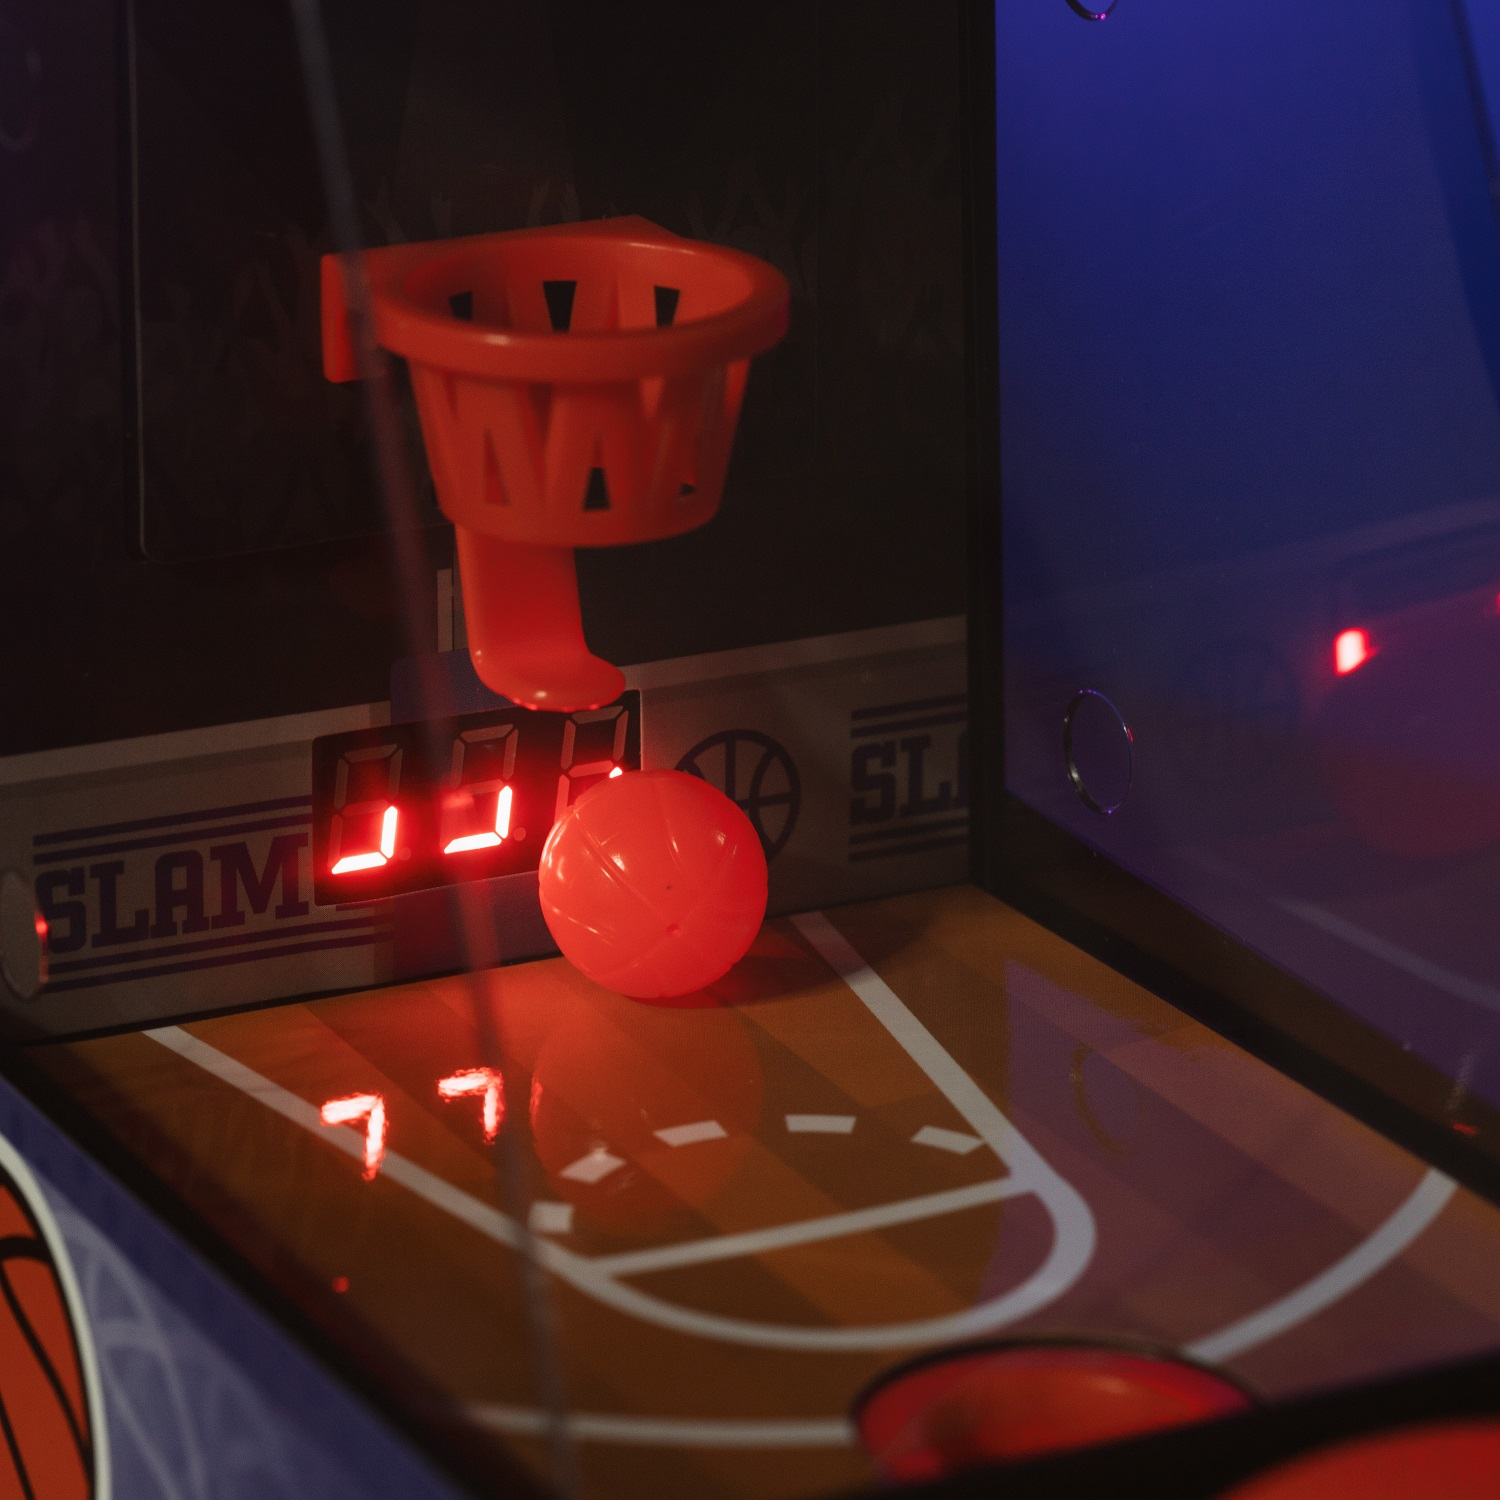 ORB Basket Machine Arcade Ball Retro